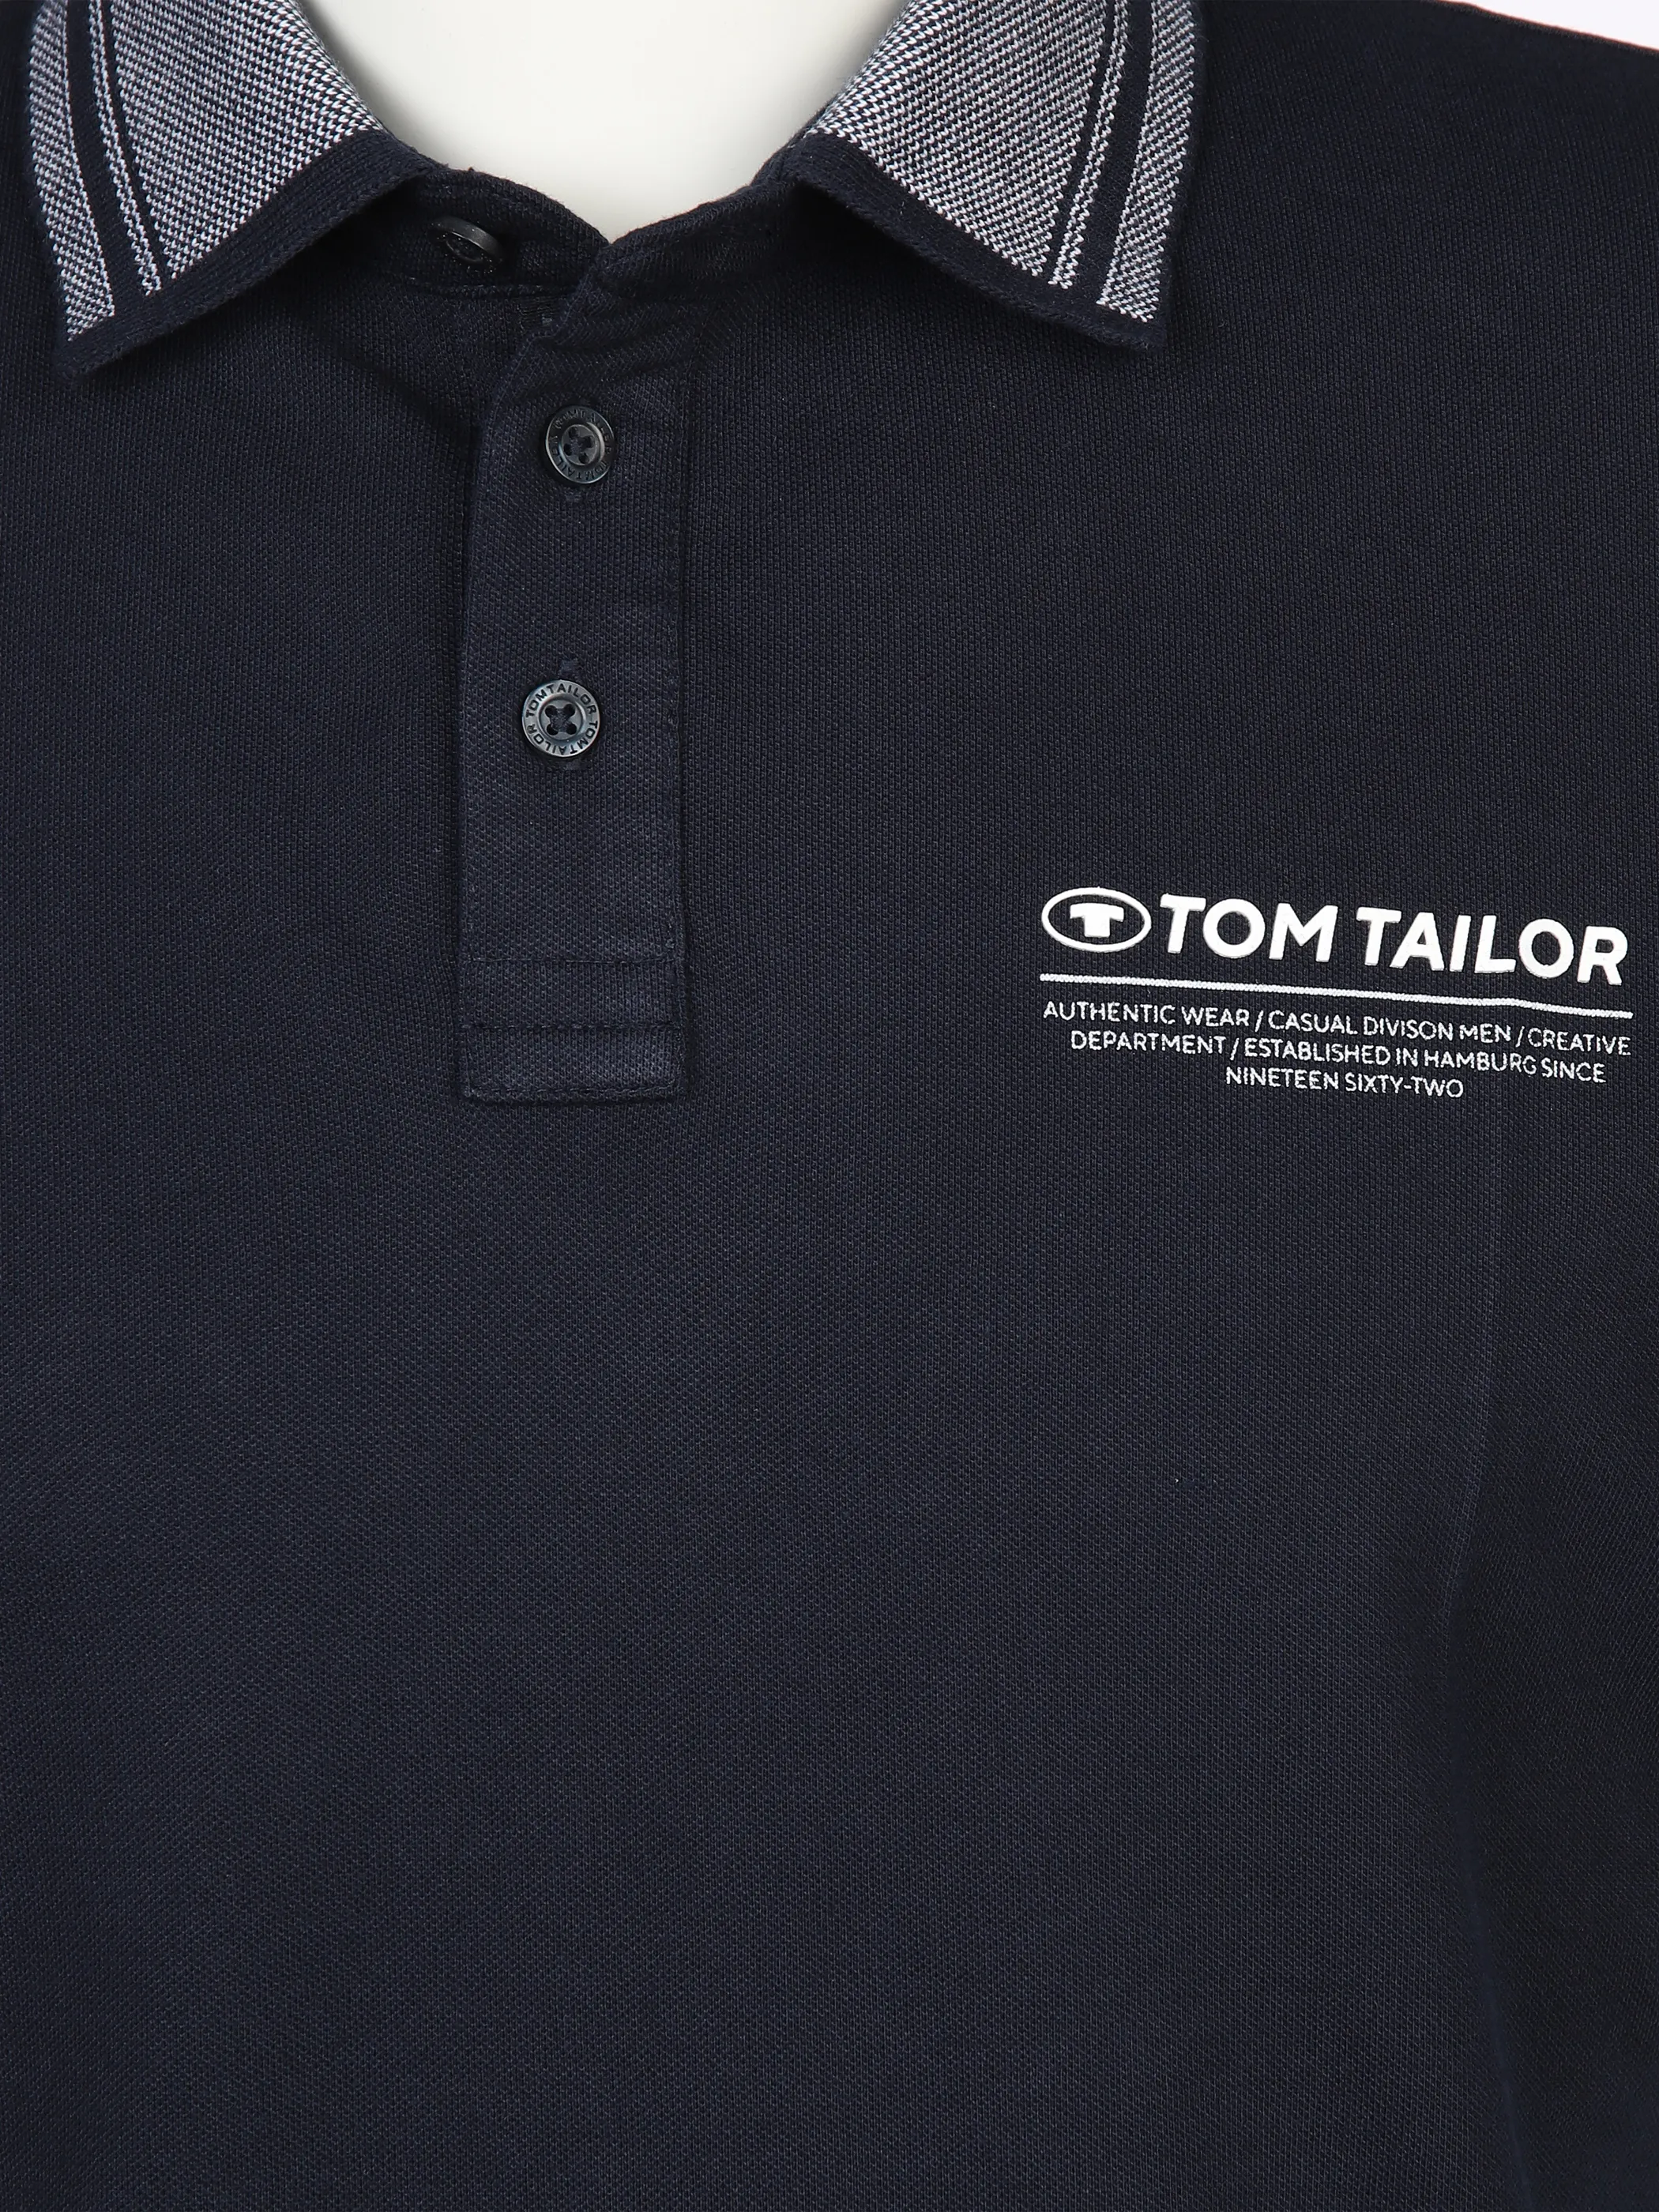 Tom Tailor 1040823 NOS polo with details Blau 890932 10668 3